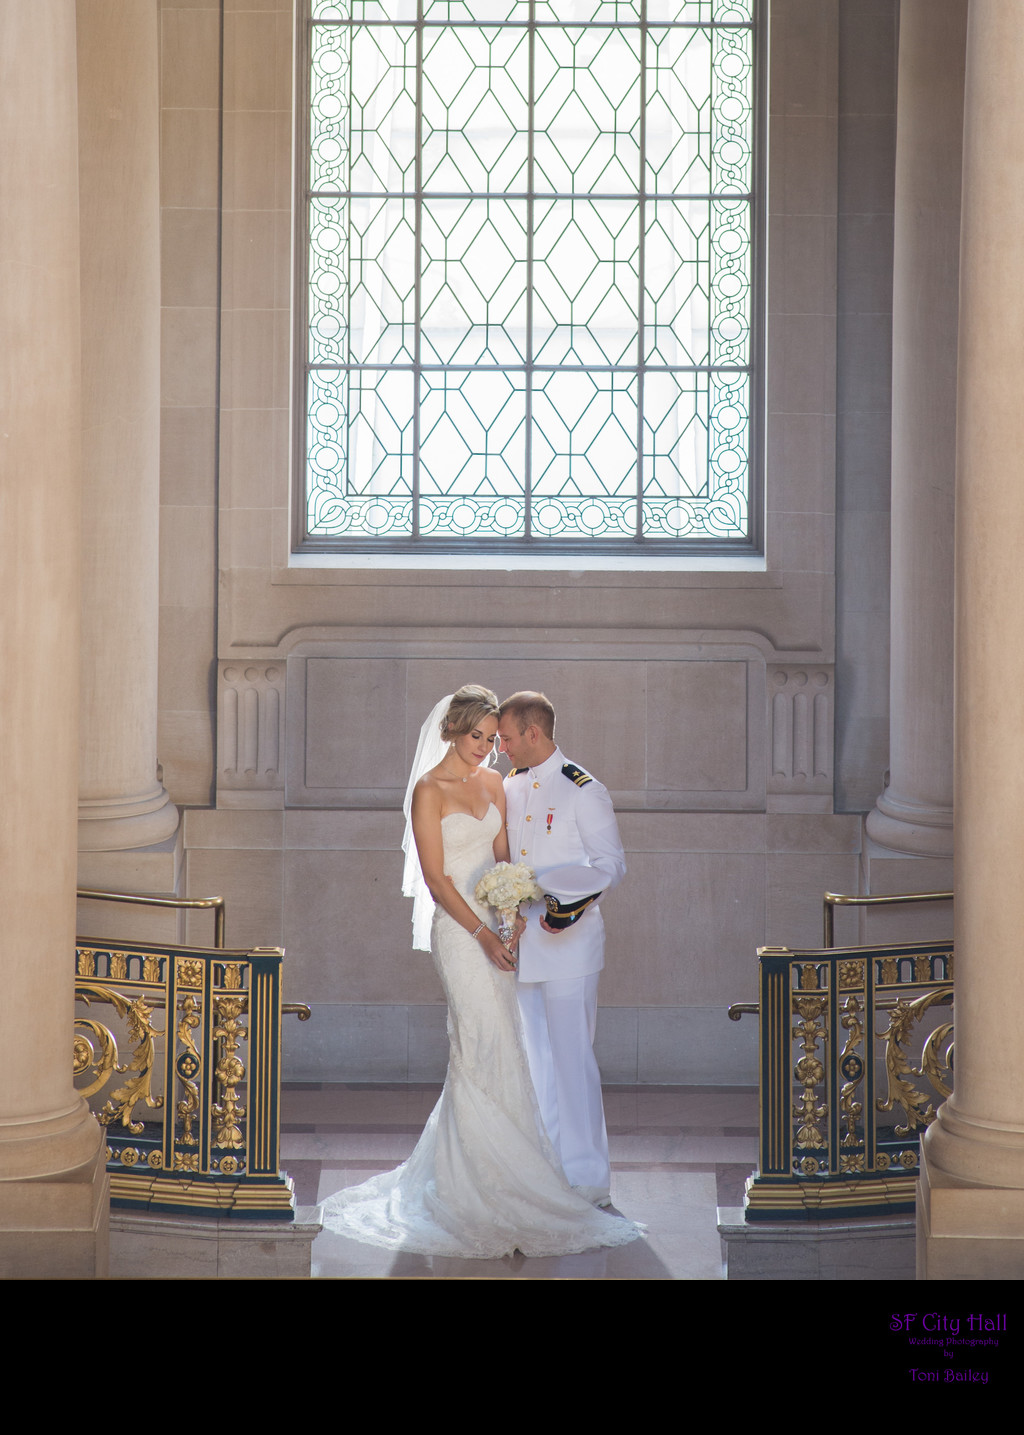 San Francisco city hall wedding photography - Navy Bride and Groom